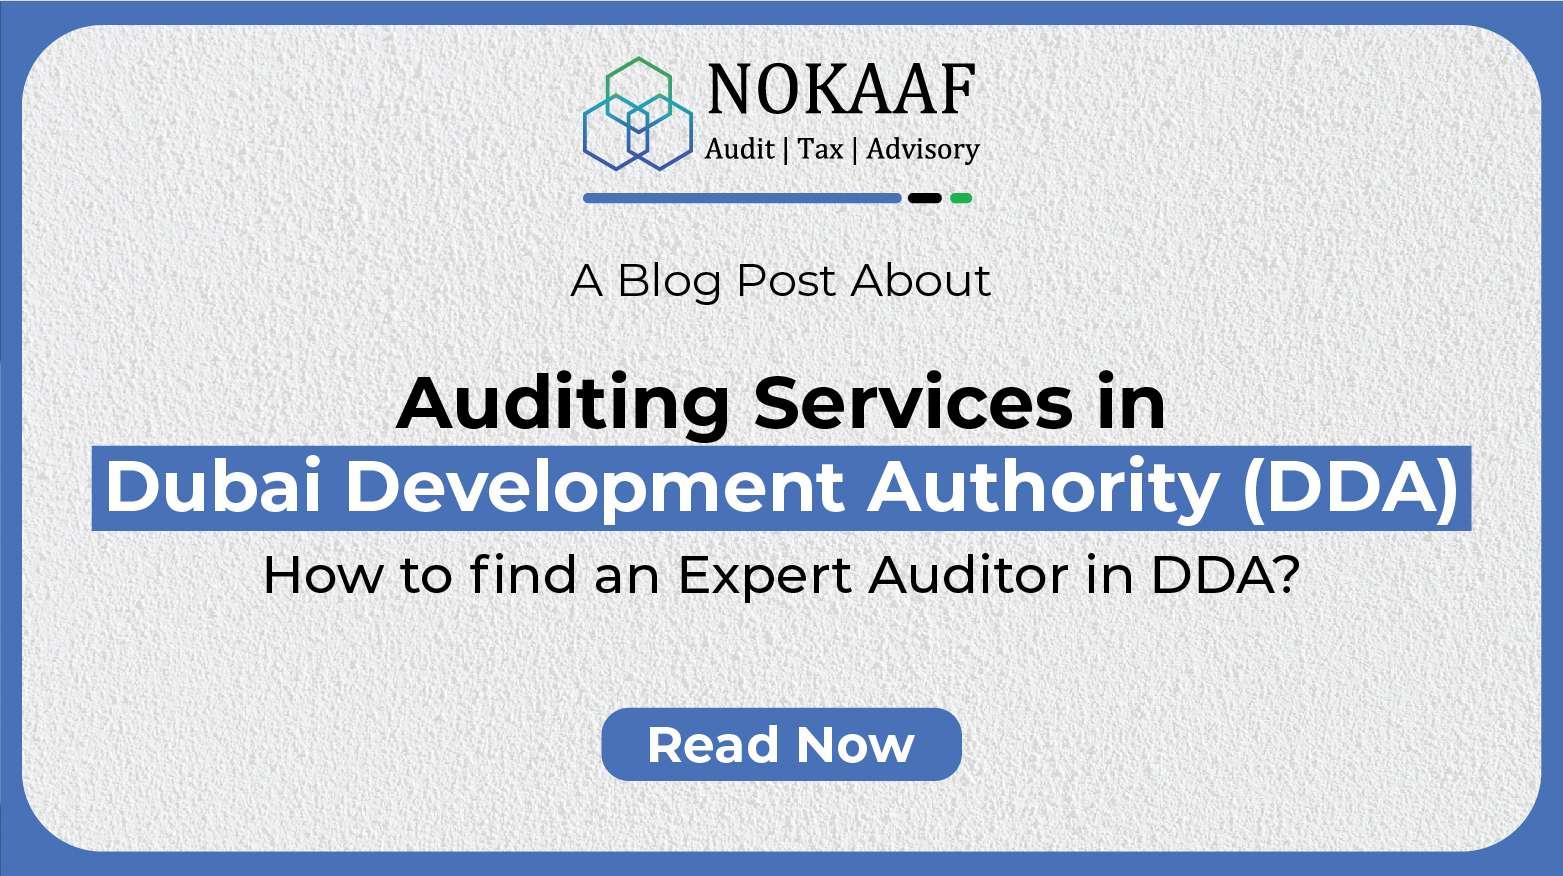 Auditing Services in Dubai Development Authority (DDA)